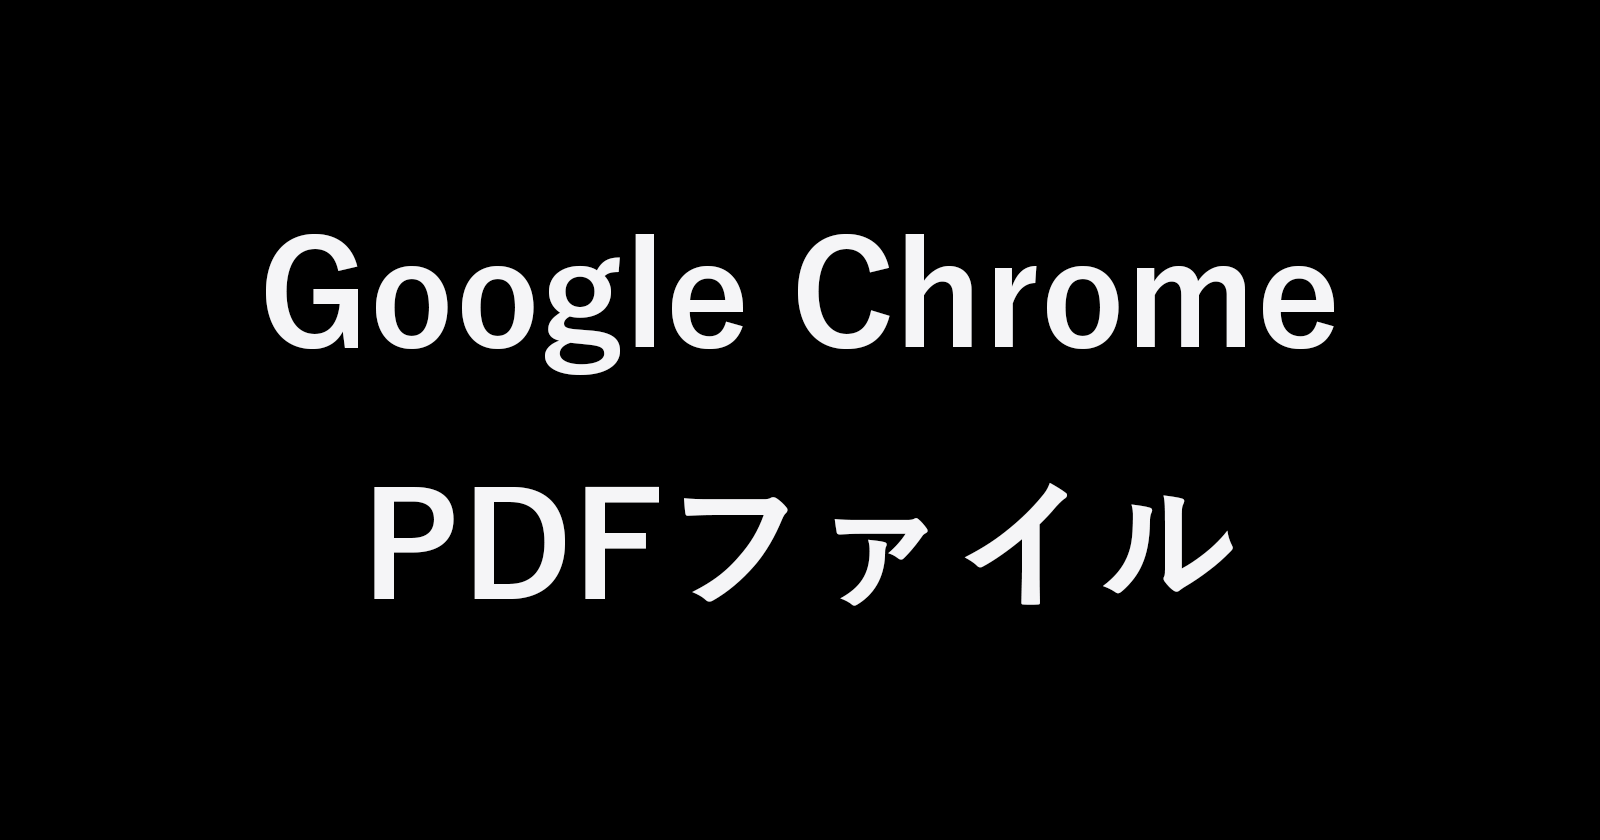 google chrome pdf editor save file